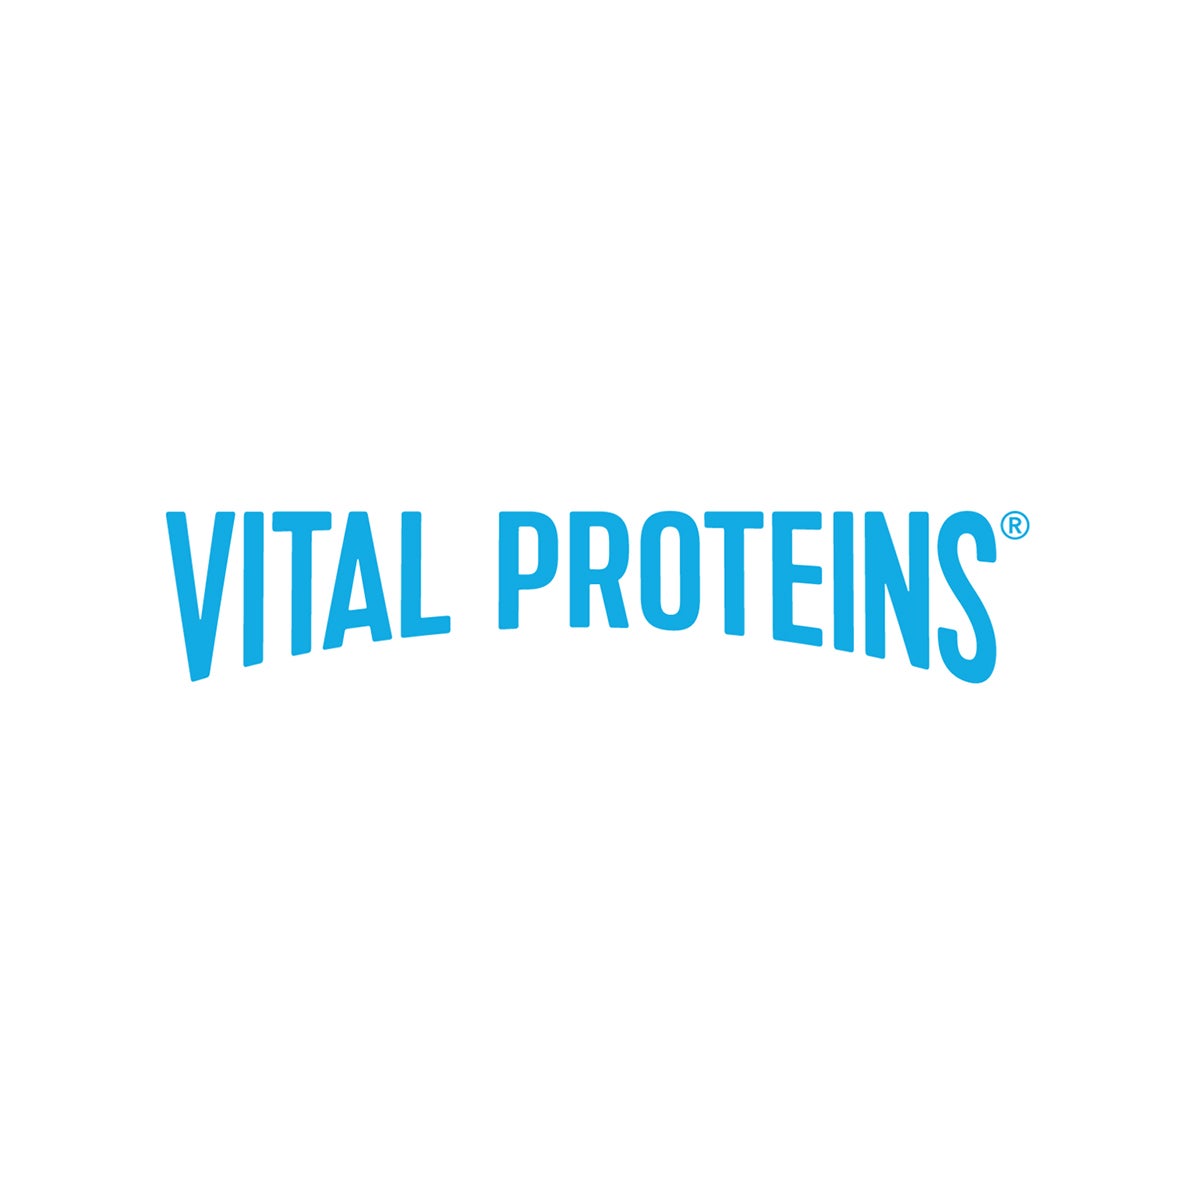 NHSc_Logos_vital_proteins_logo